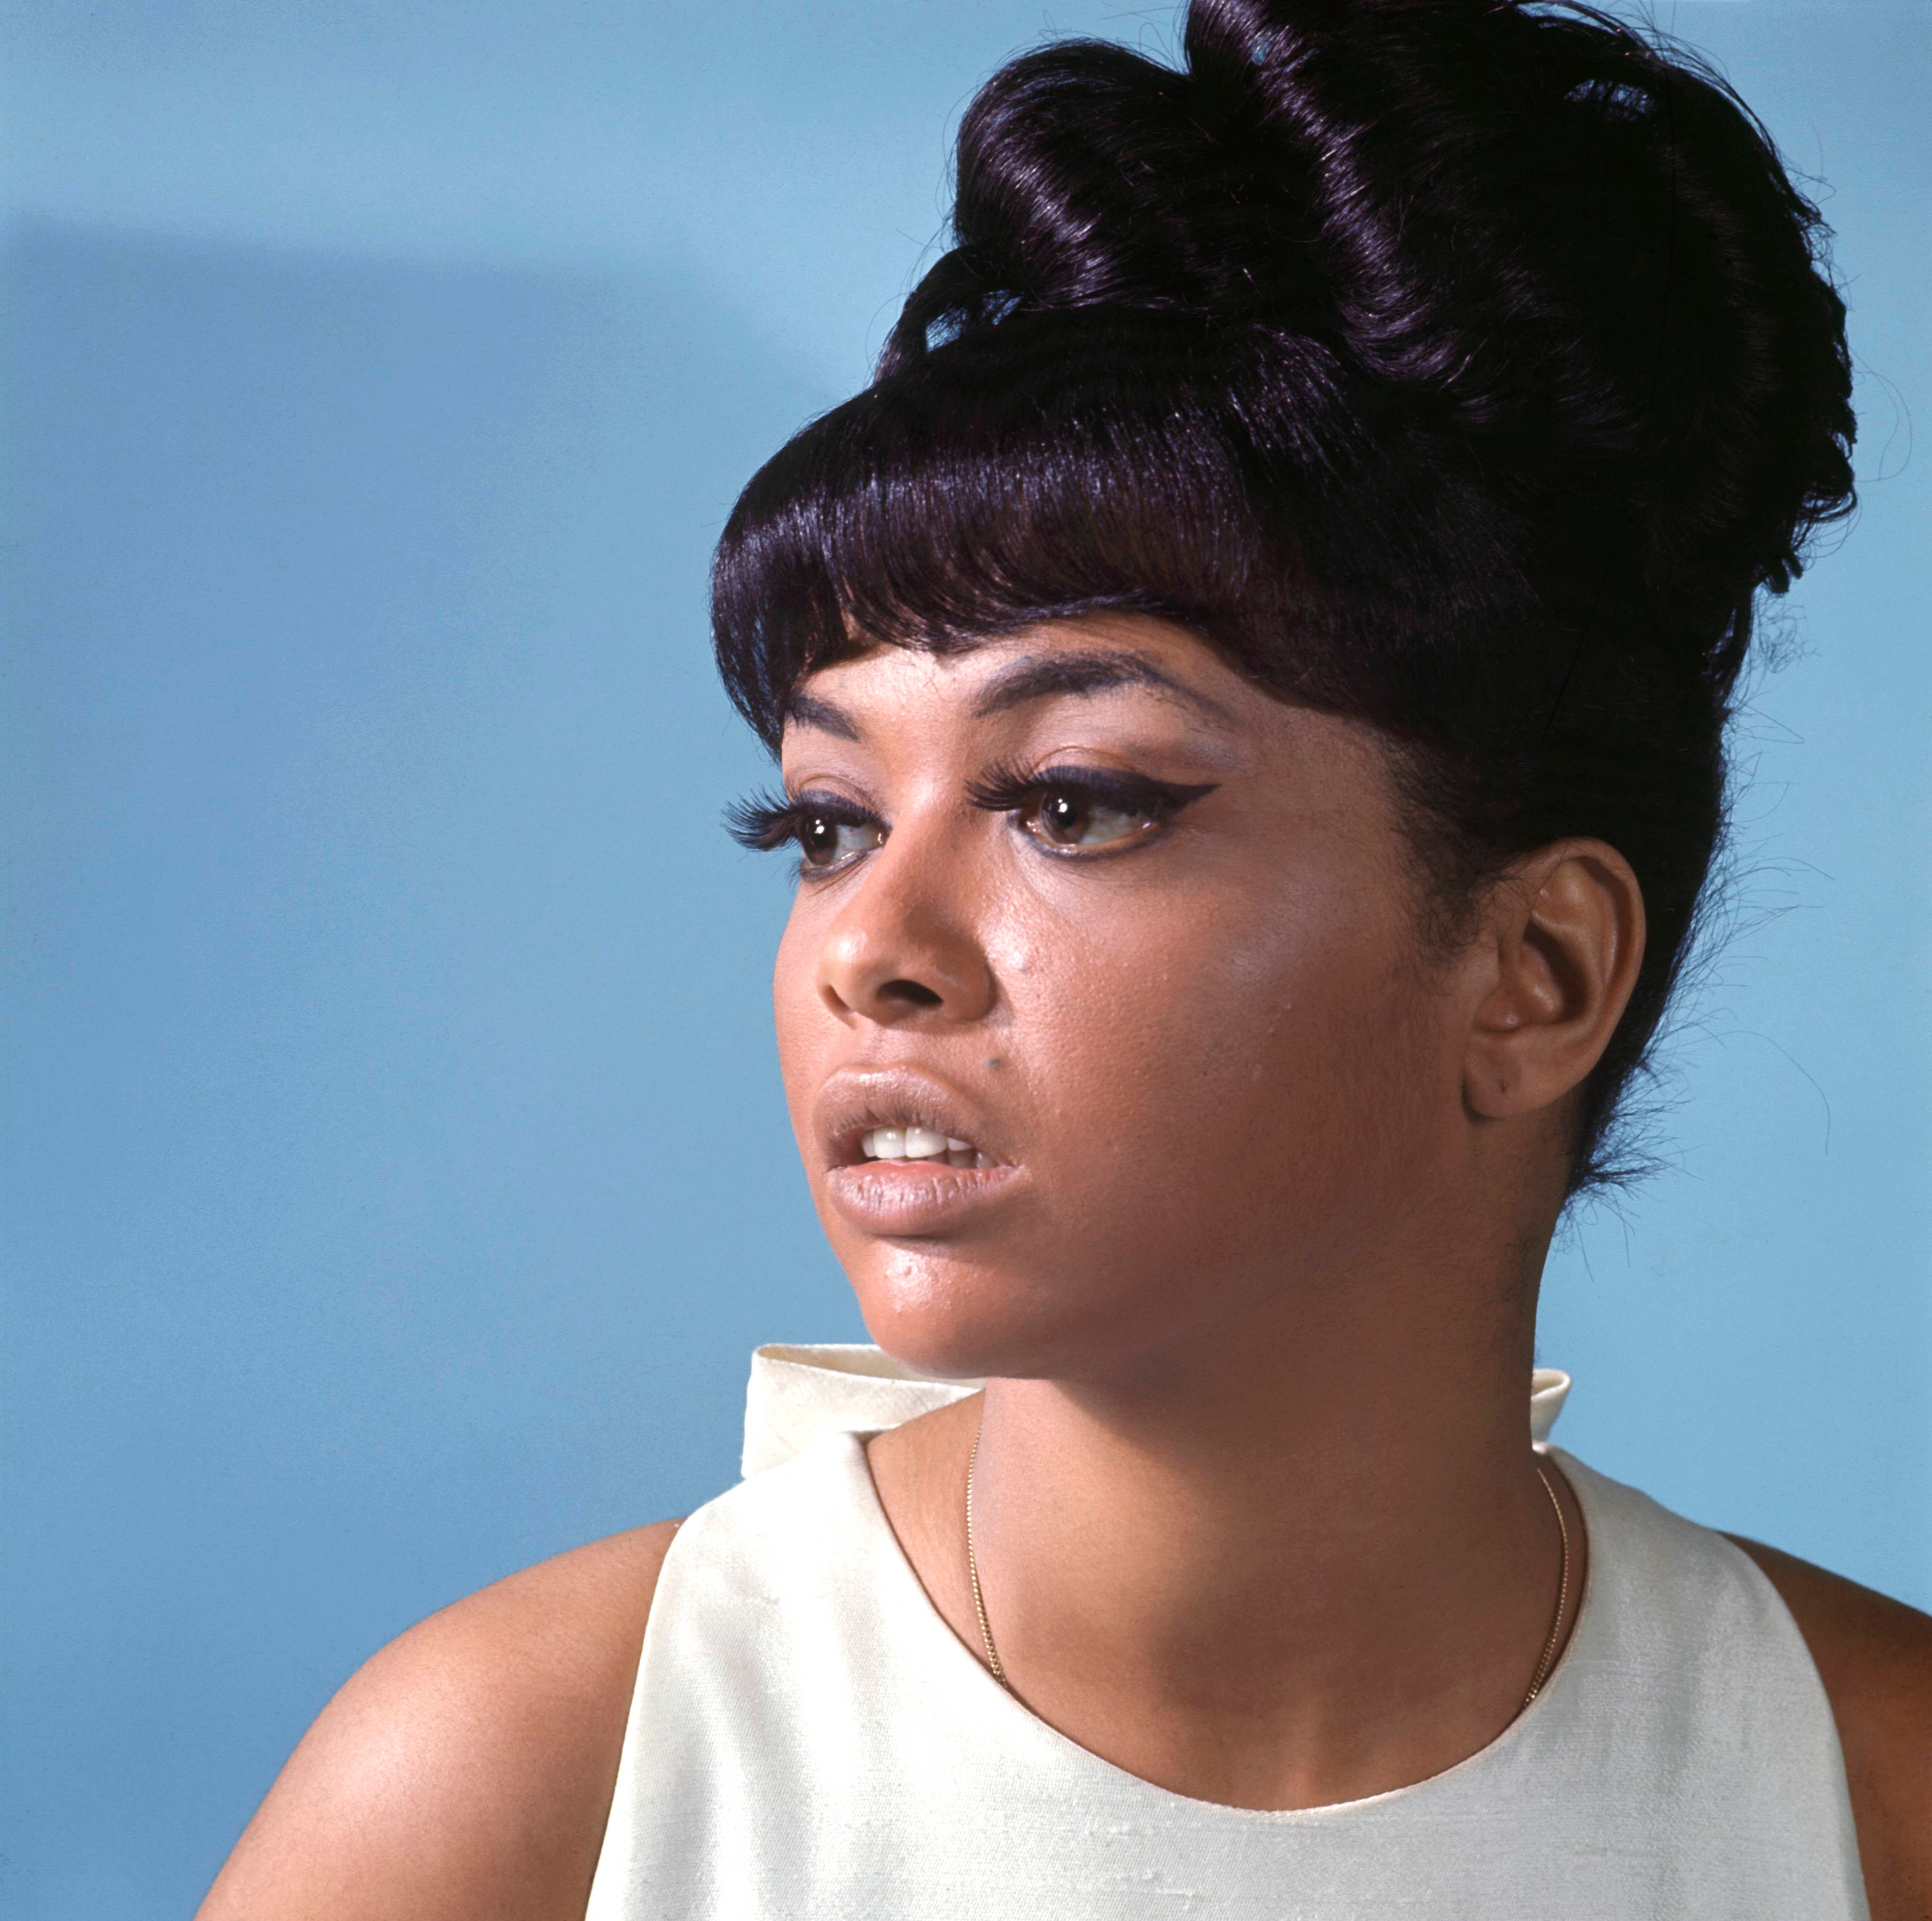 15 Celebrity Women Who Set Hair Trends In The Swingin’ 60s